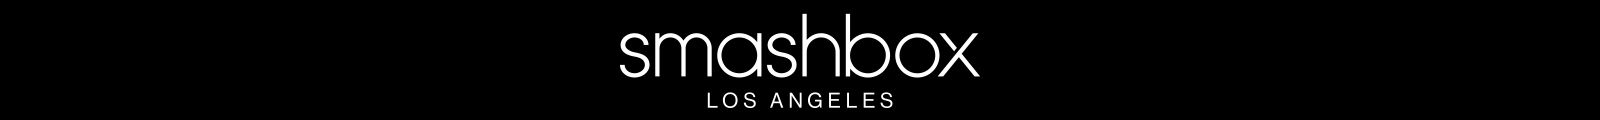 smashbox, Los Angeles